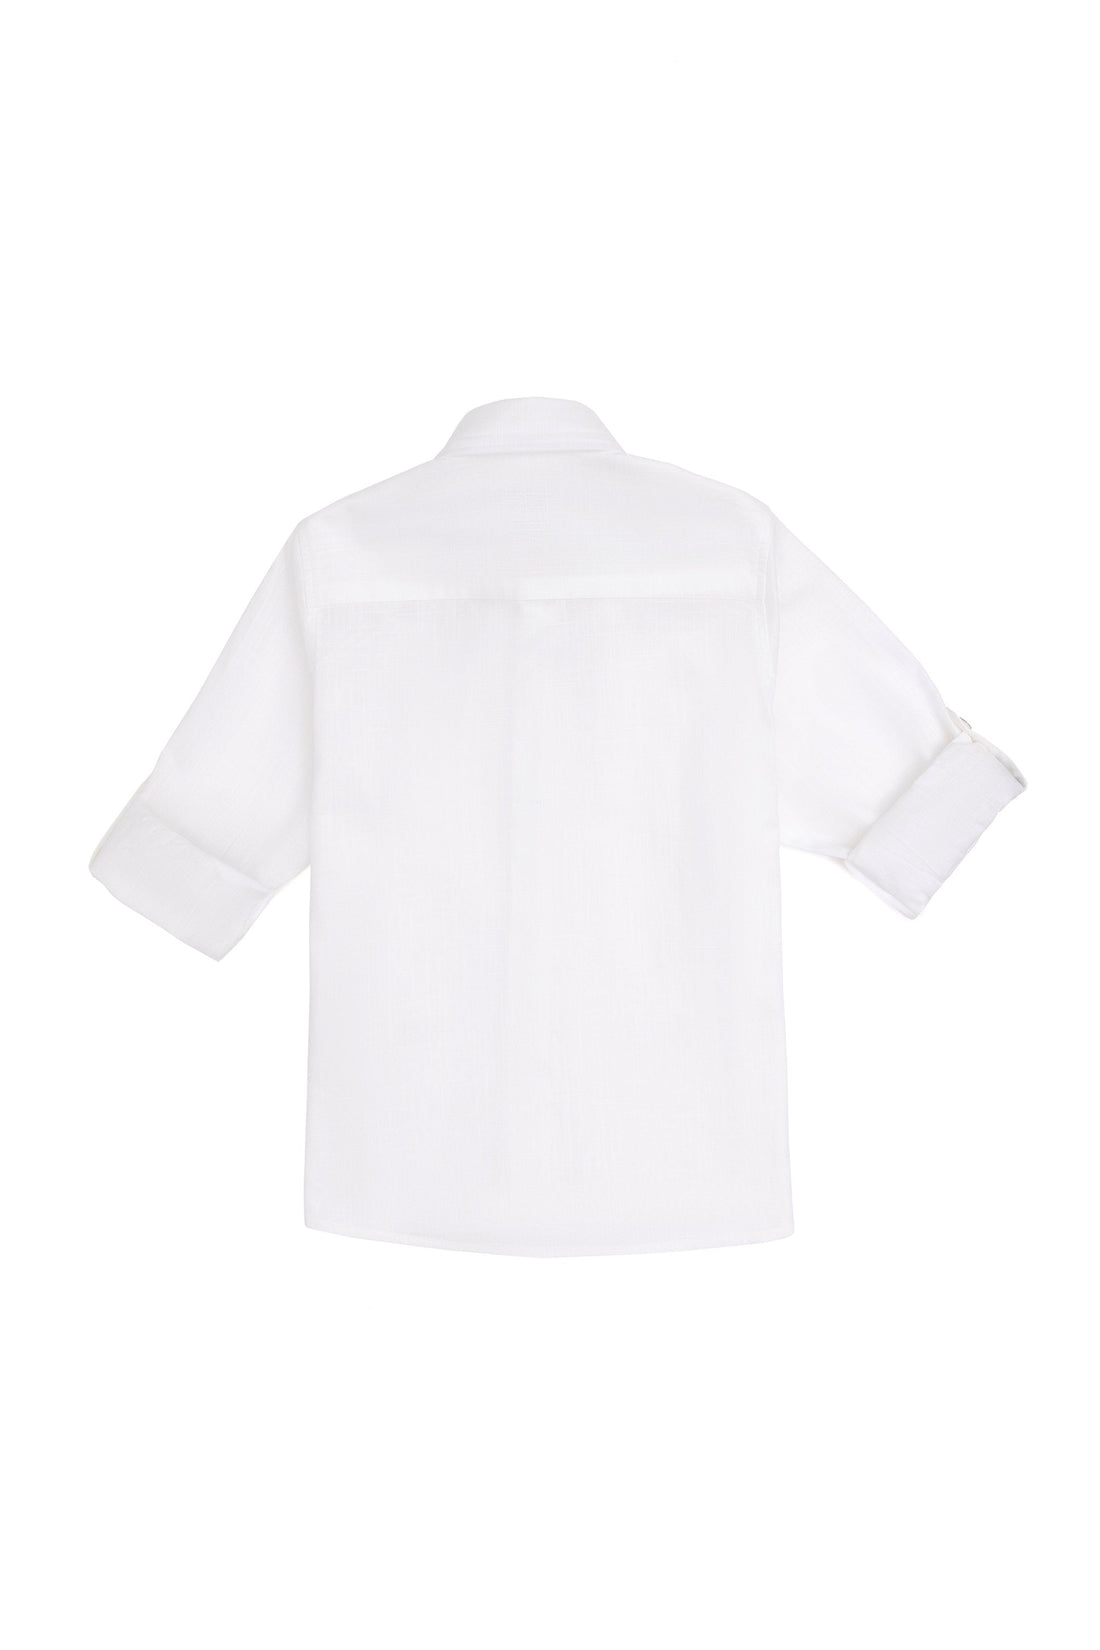 Boys White Shirt Long Sleeve_G083SZ0040 1840402_VR013_02